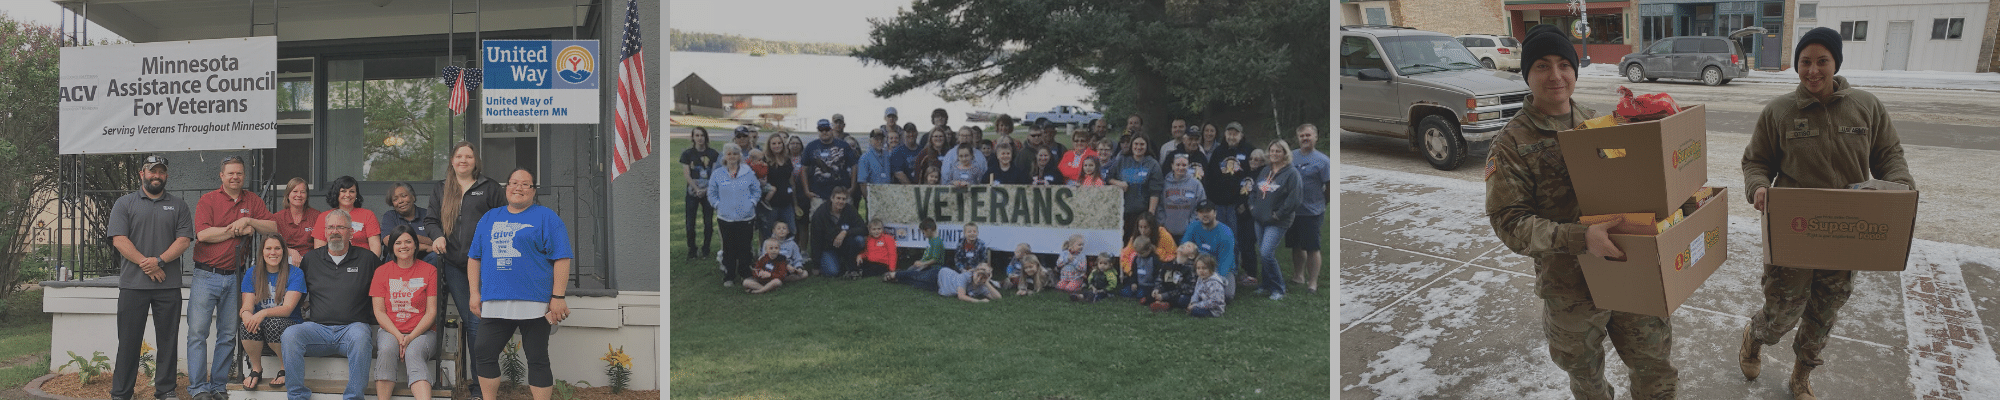 United for Veterans volunteers and local veterans